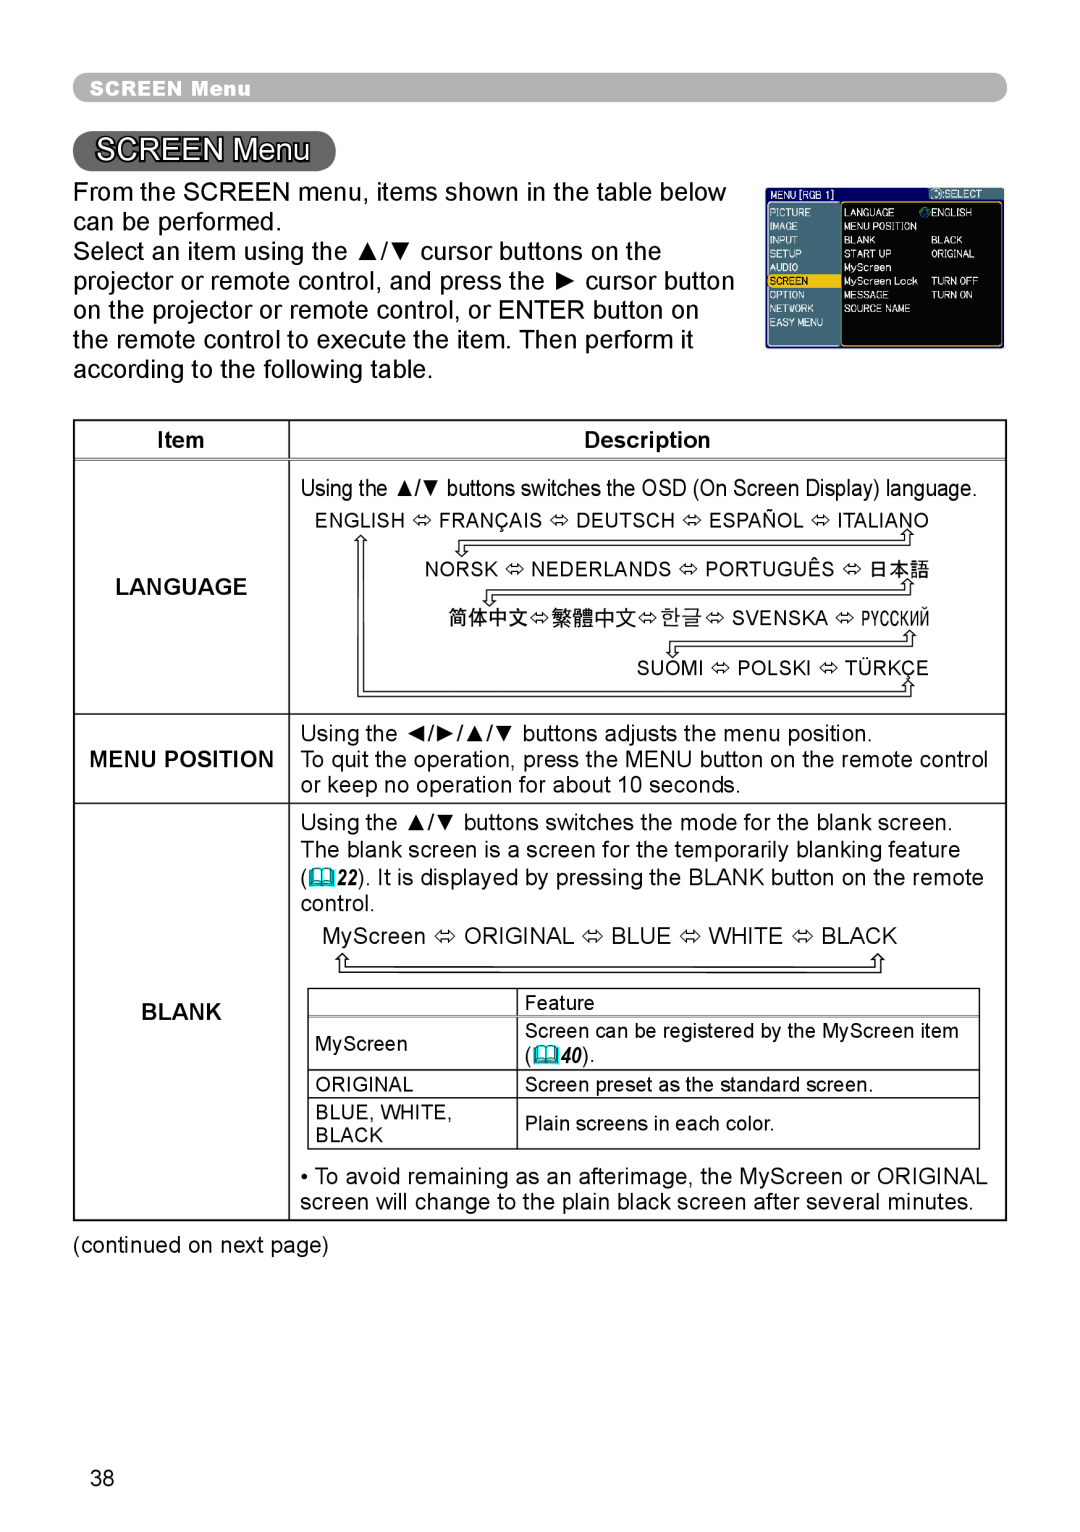 Planar PR9020 user manual SCREEN Menu, Description, Language, Using the /// buttons adjusts the menu position, Blank 